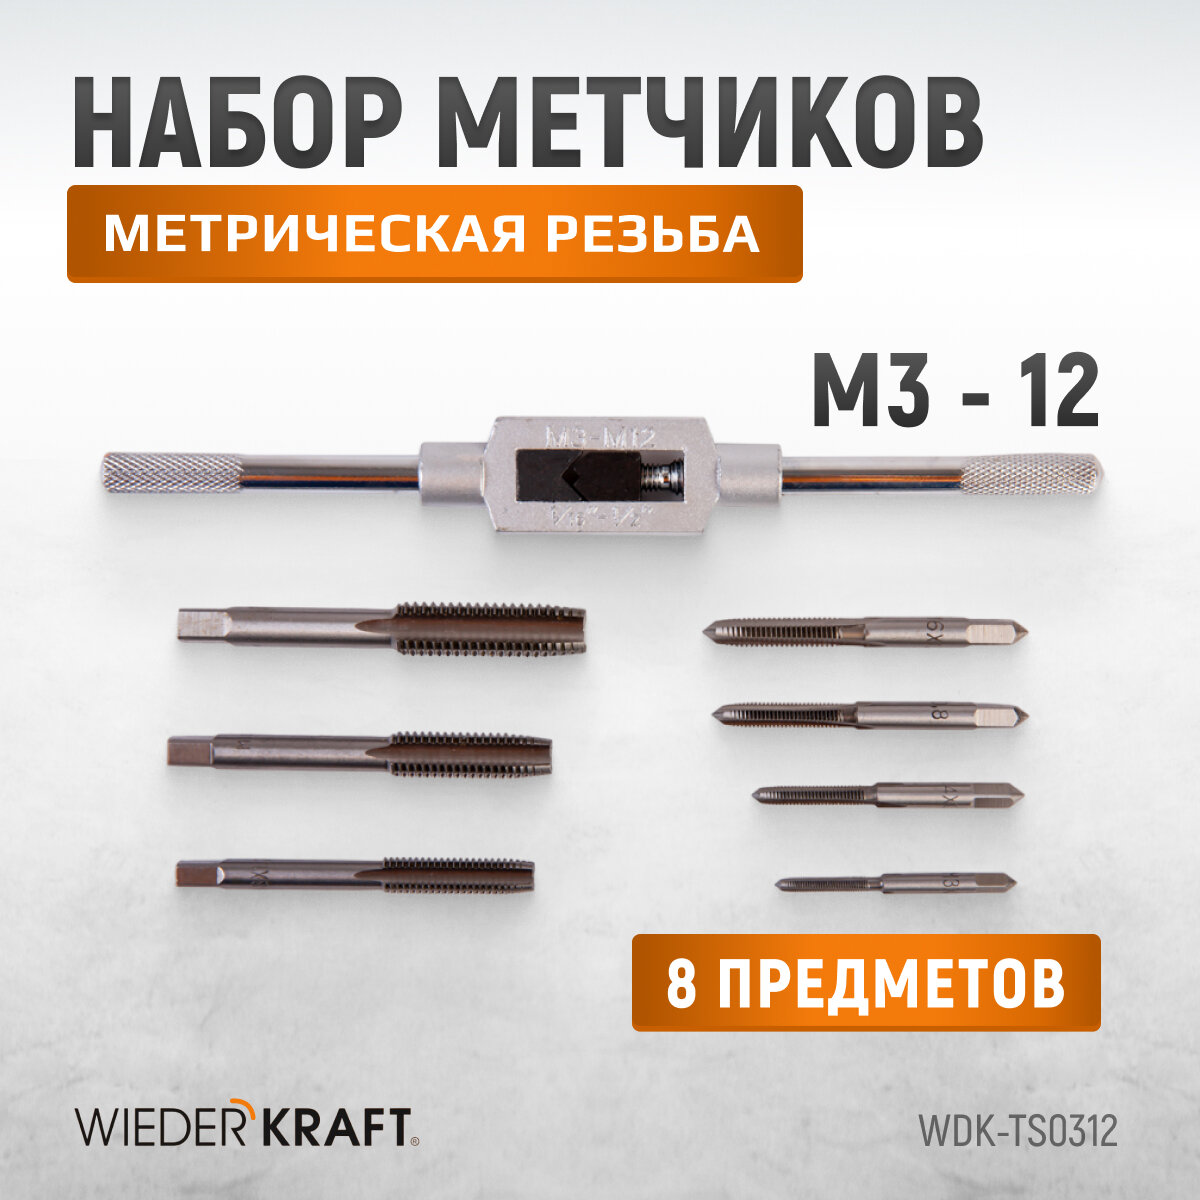 Набор метчиков М3 - 12, 8 предметов, WIEDERKRAFT WDK-TS0312